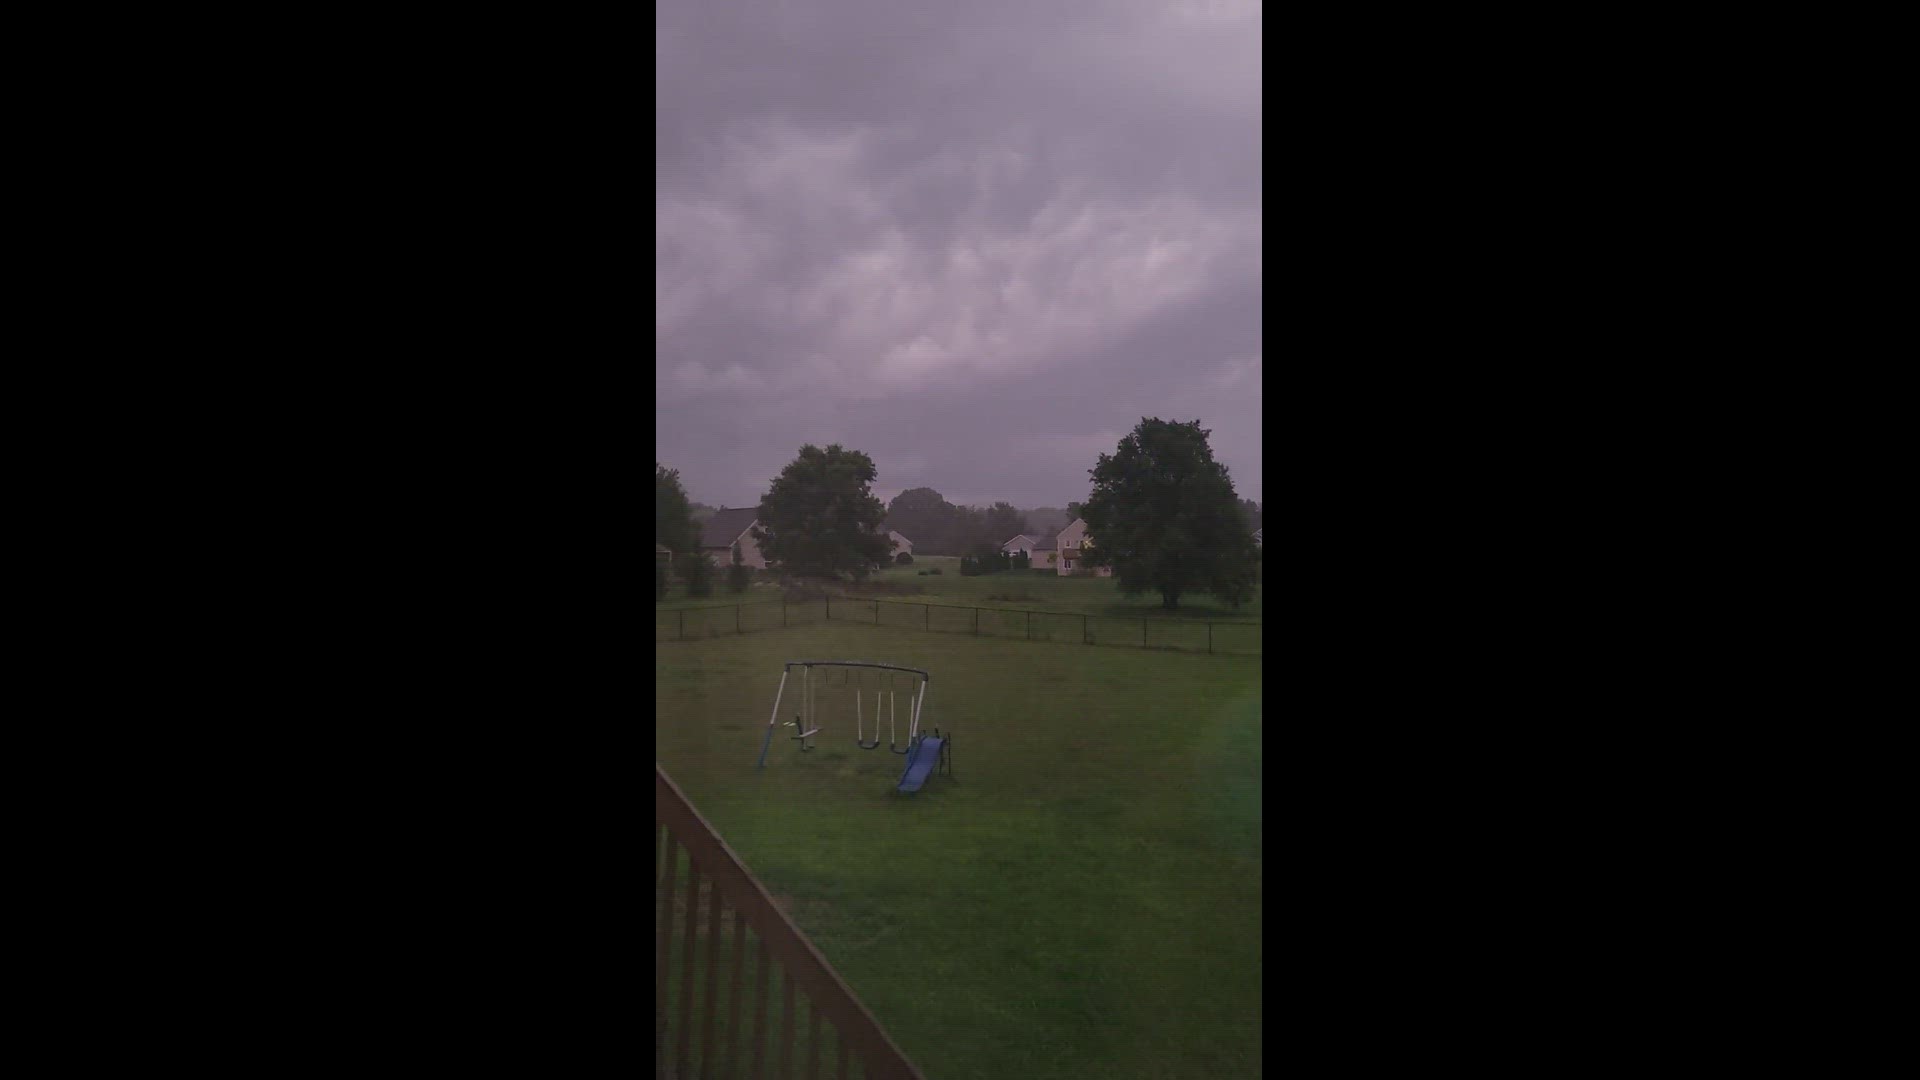 Thunderstorms approach Cedar Springs
Credit: Amy Bonjour